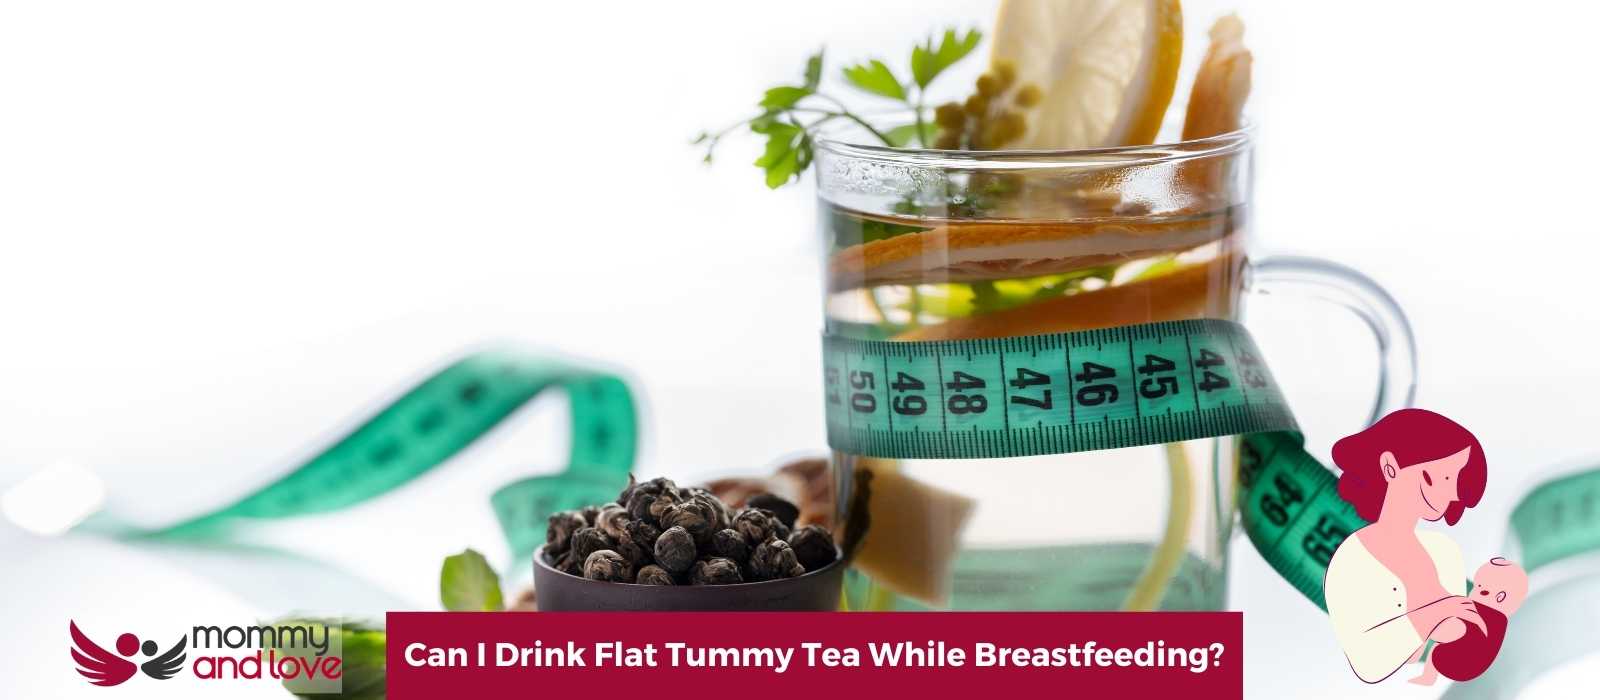 Can I Drink Flat Tummy Tea While Breastfeeding?